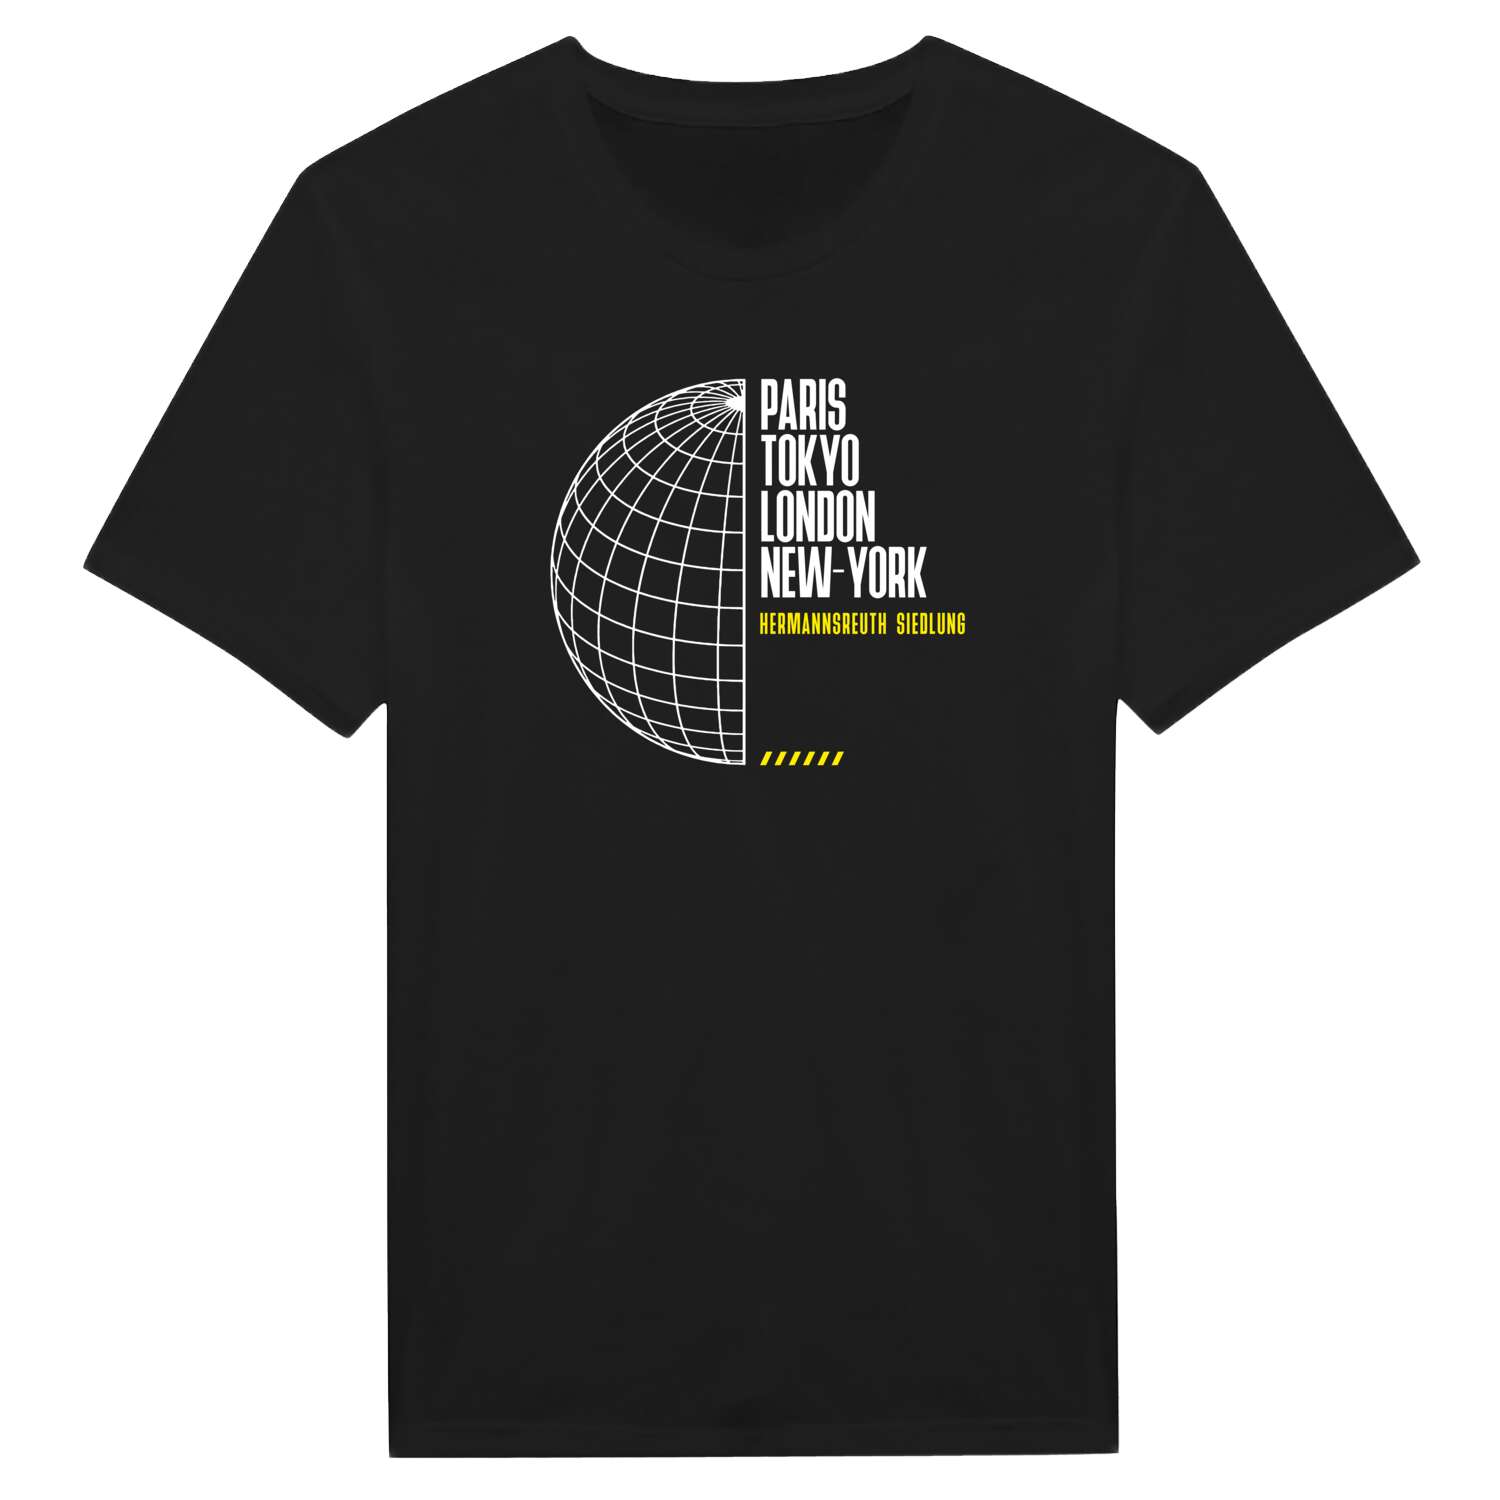 Hermannsreuth Siedlung T-Shirt »Paris Tokyo London«